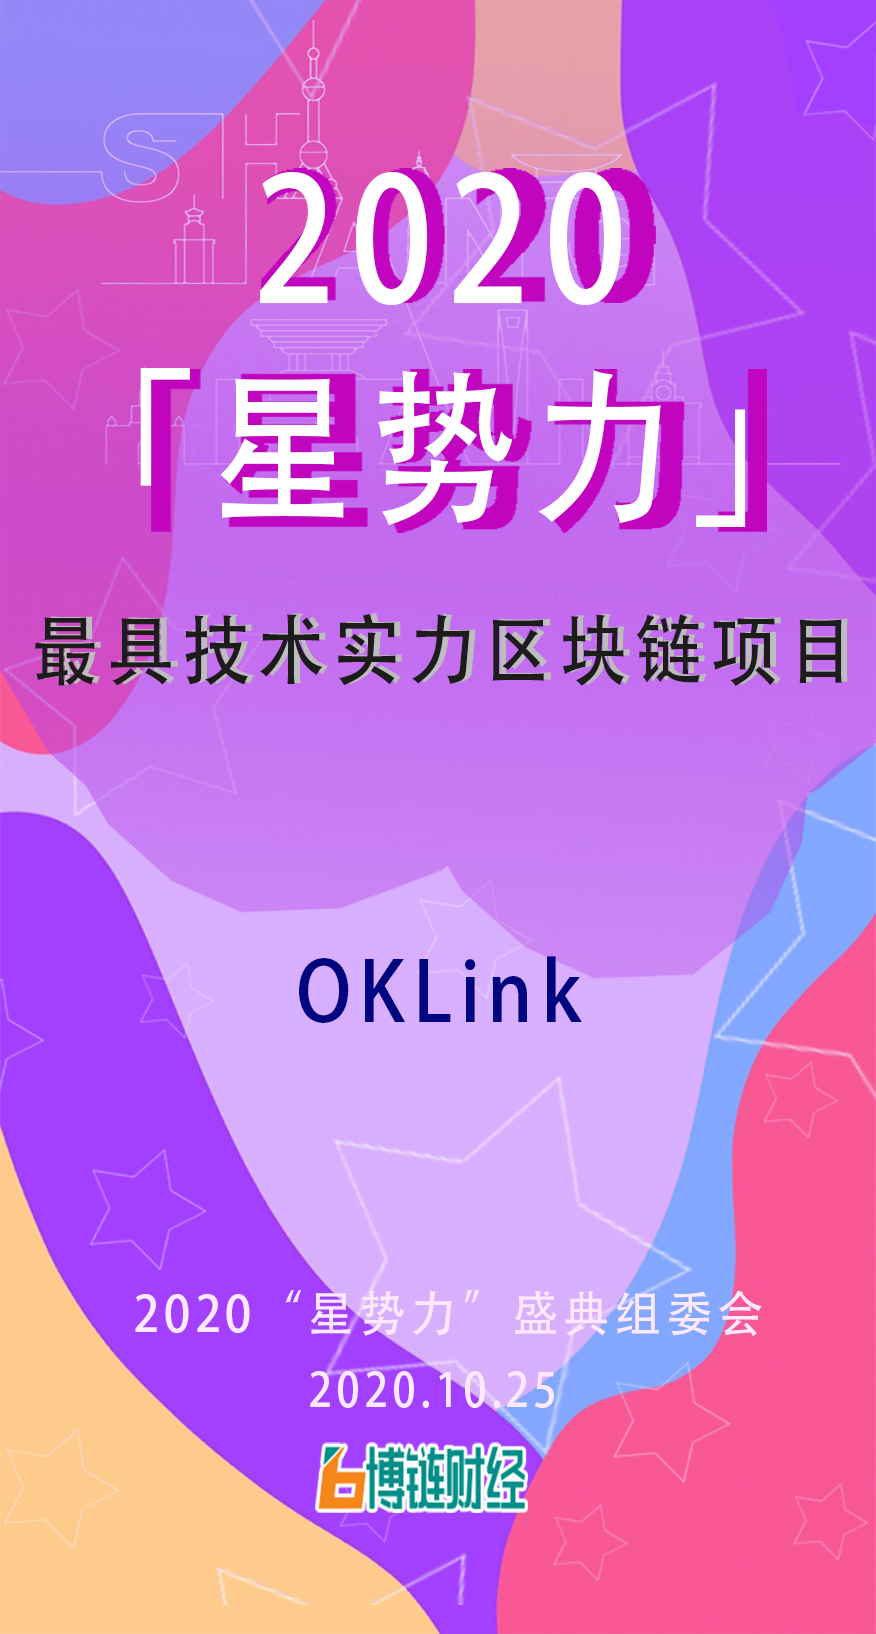 OKLink.jpg